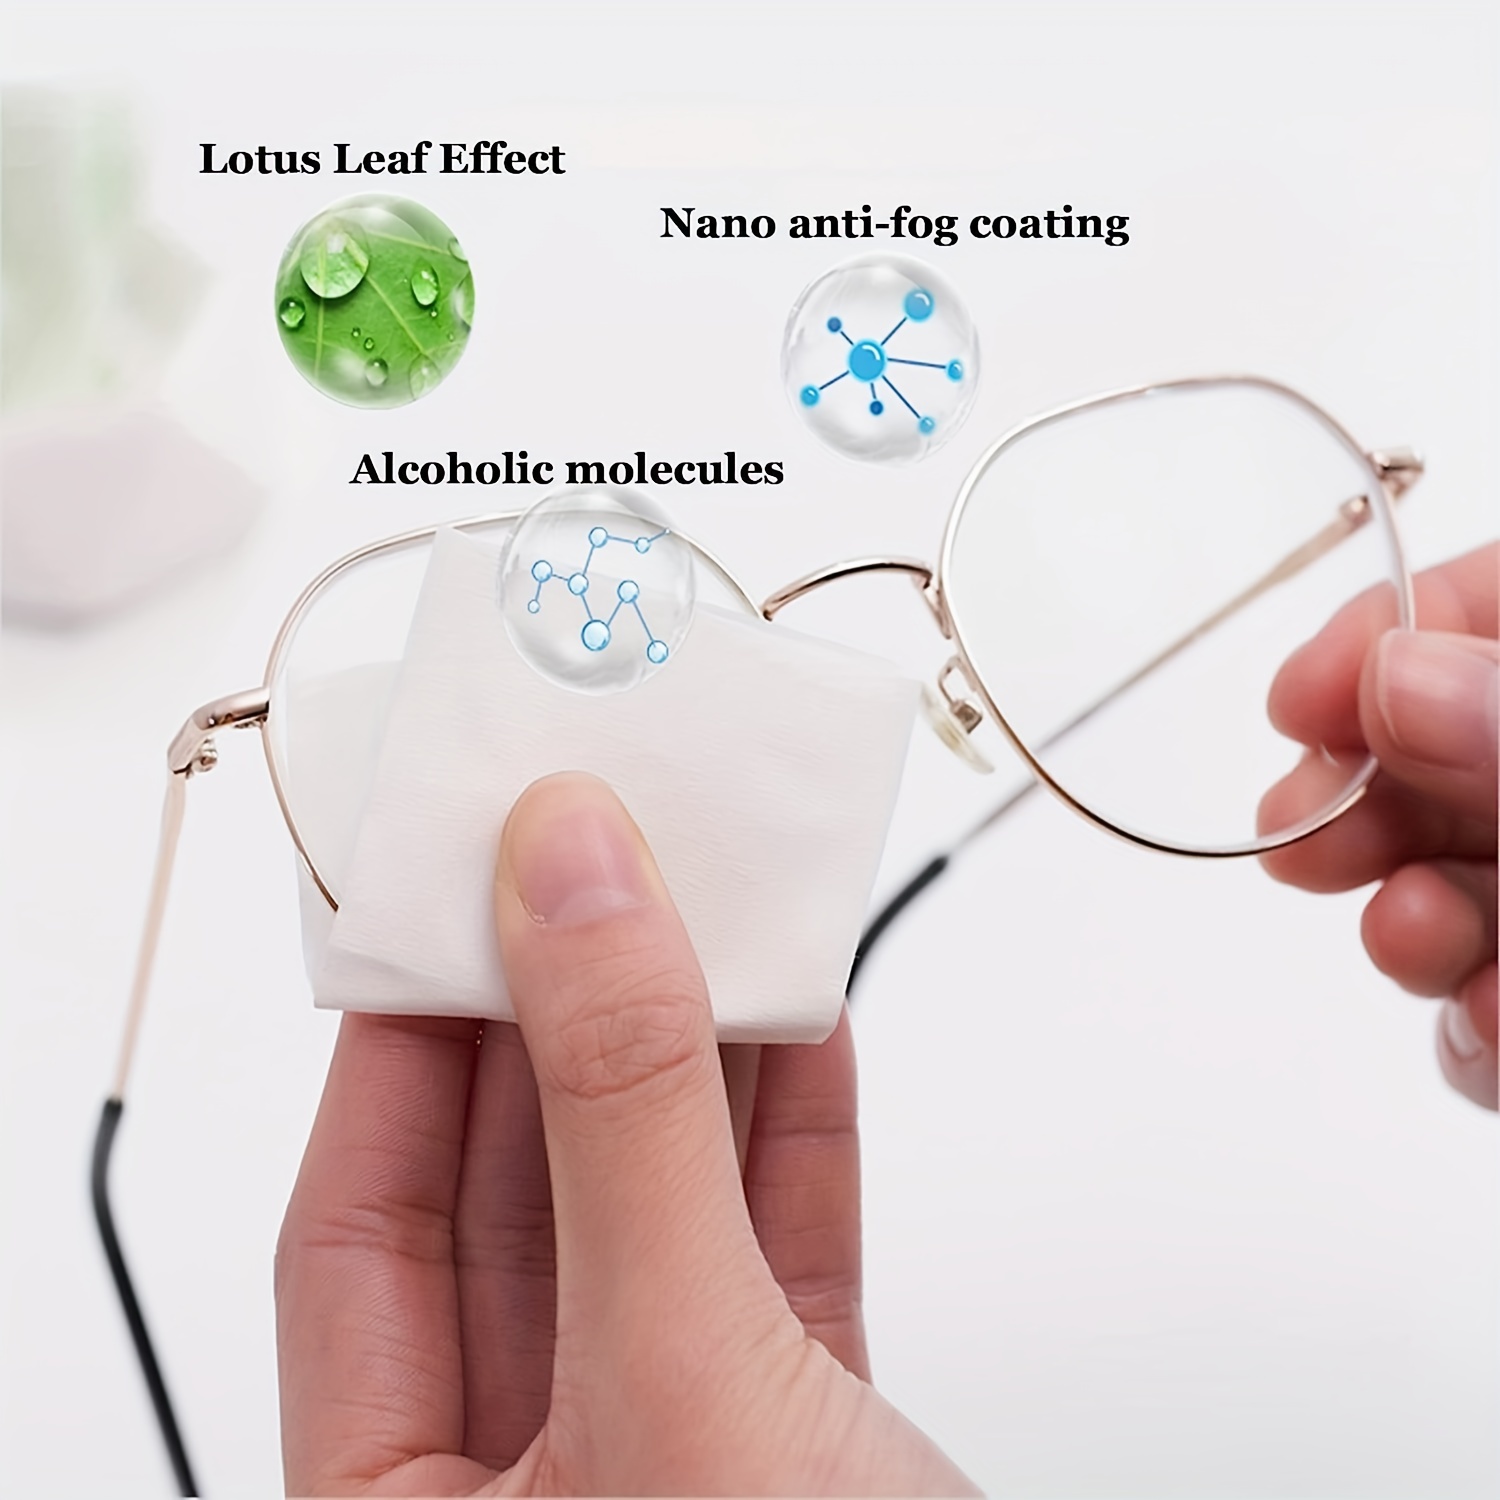  Toallitas limpiadoras de lentes para lentes: 200 toallitas de  limpieza para gafas envueltas individuales prehumedecidas